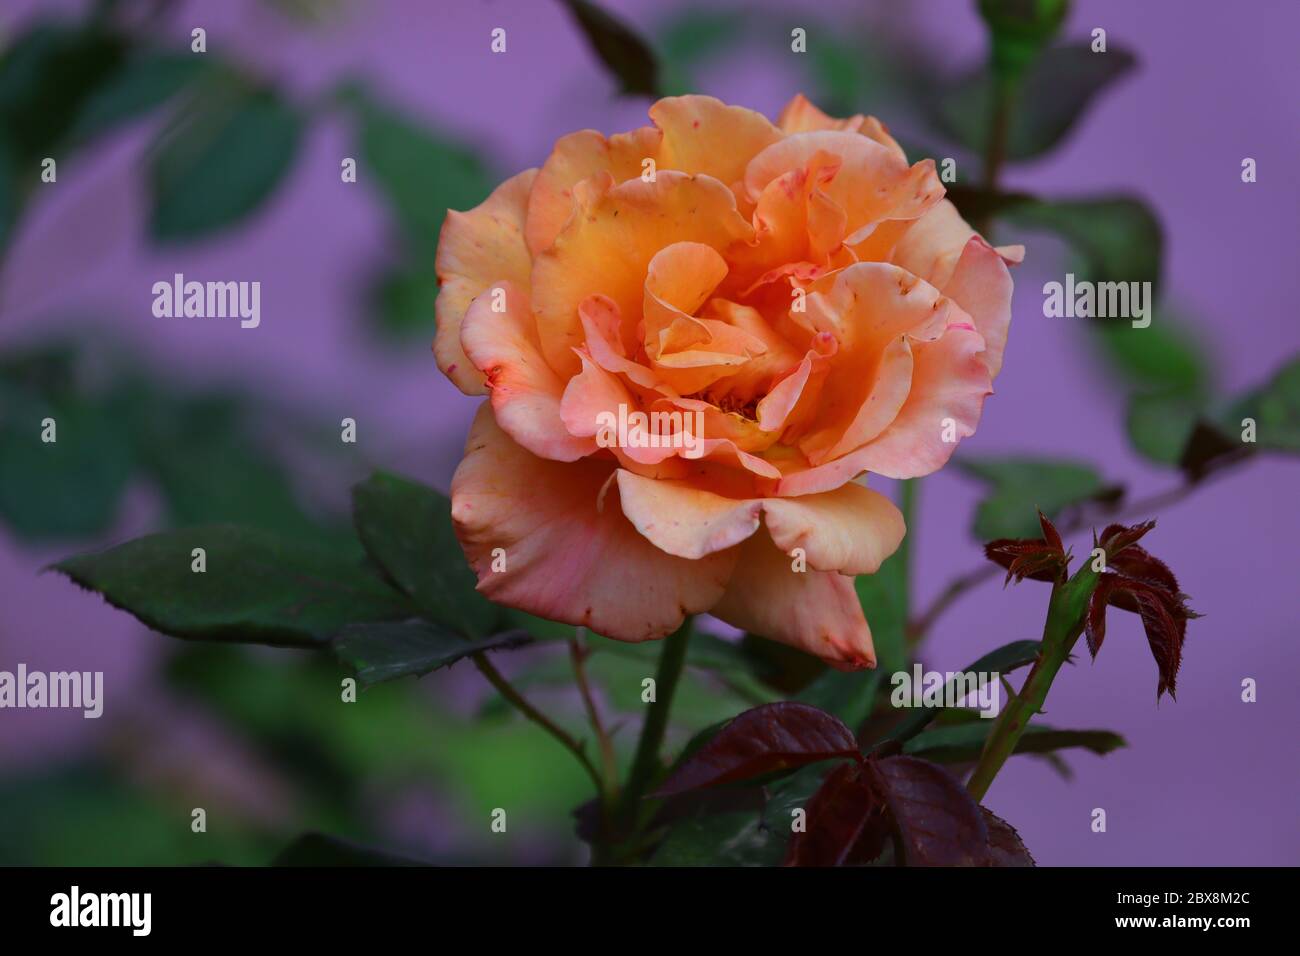 dark yellow rose flower hd image, rose flower image Stock Photo